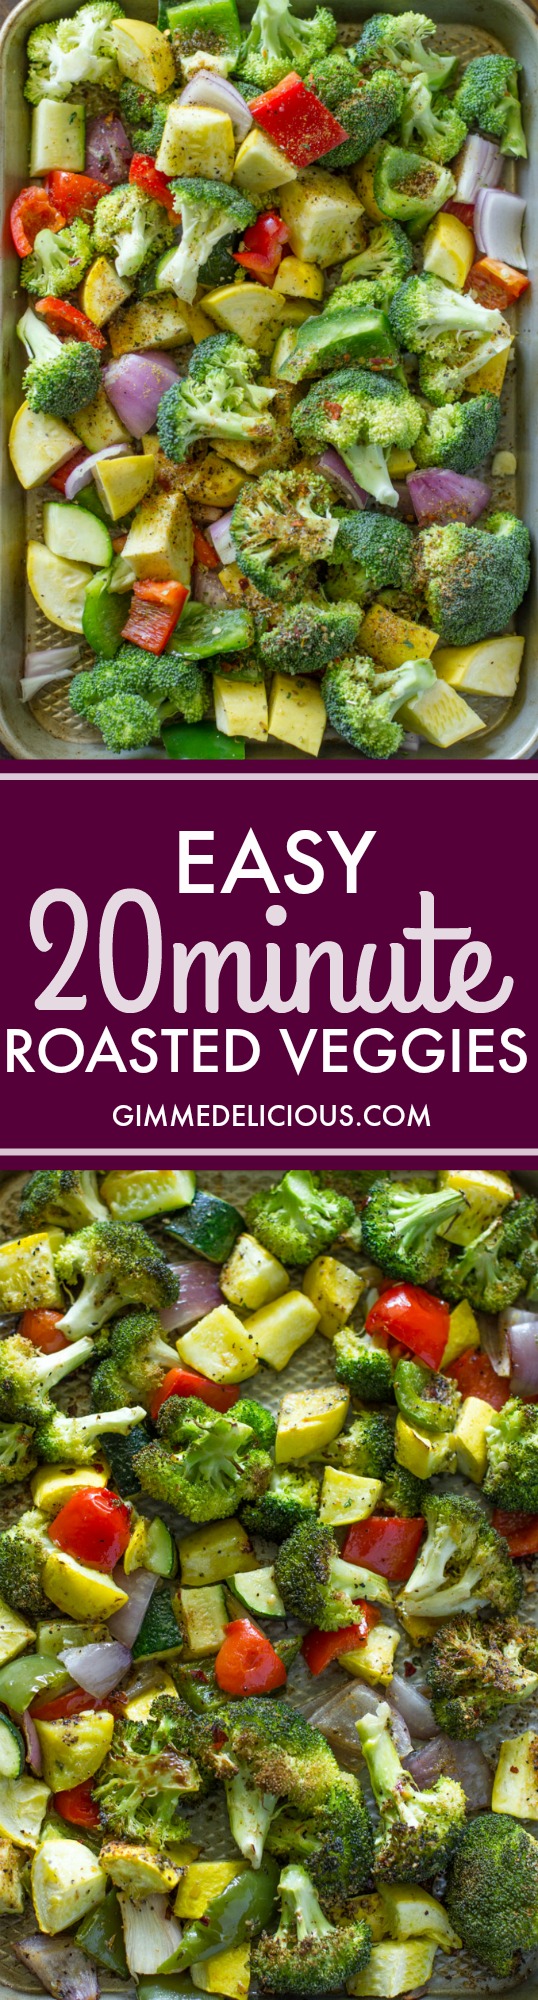 Easy 20 Minute Roasted Veggies